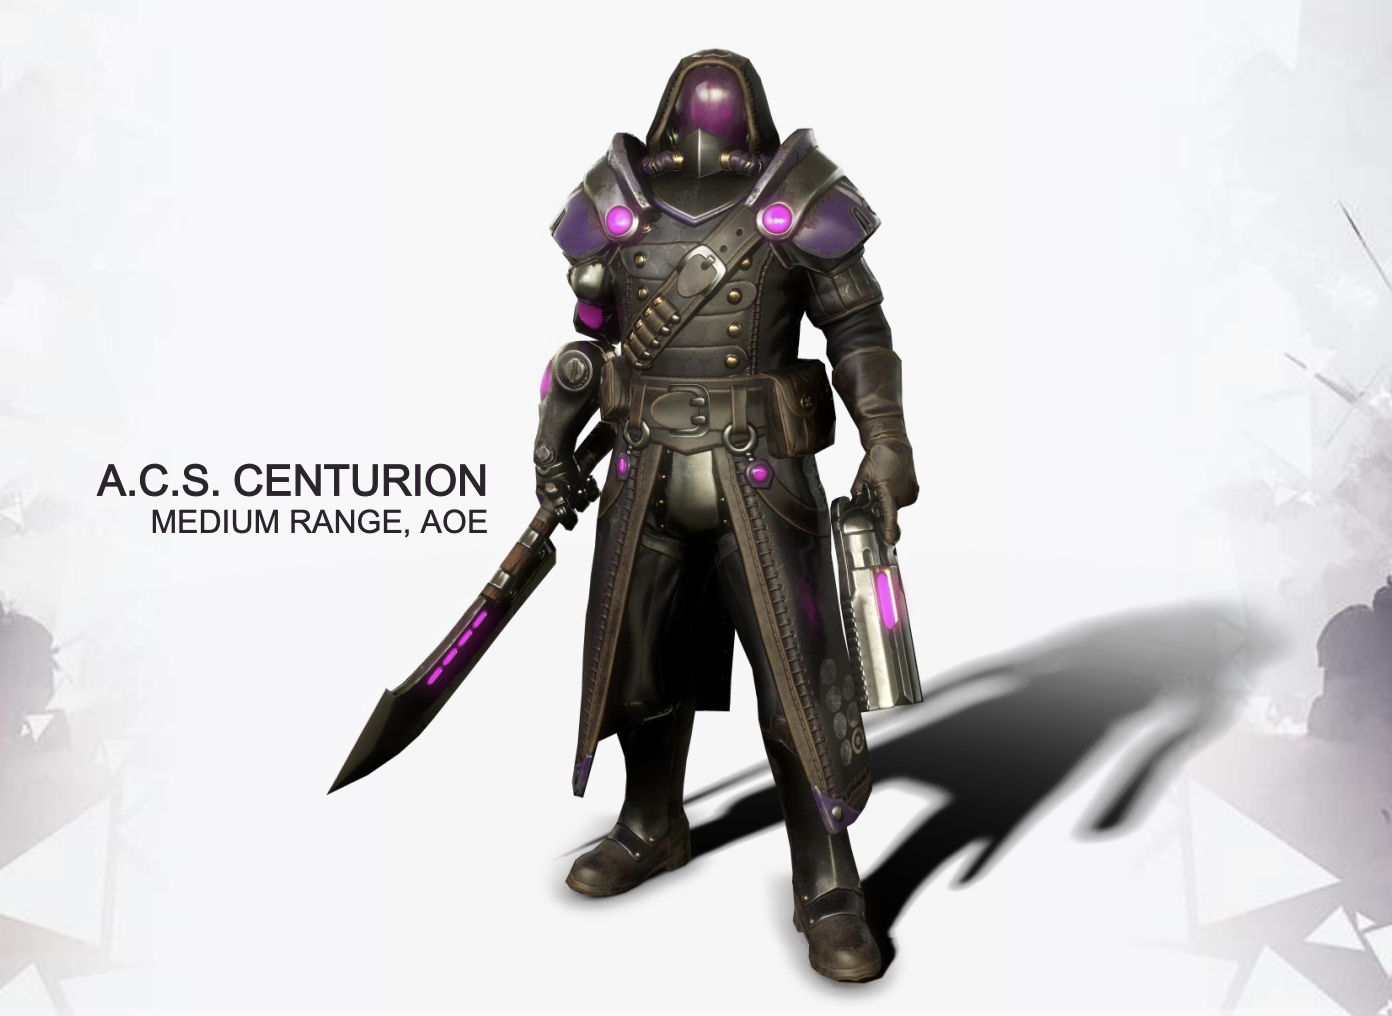 A.C.S. Centurion